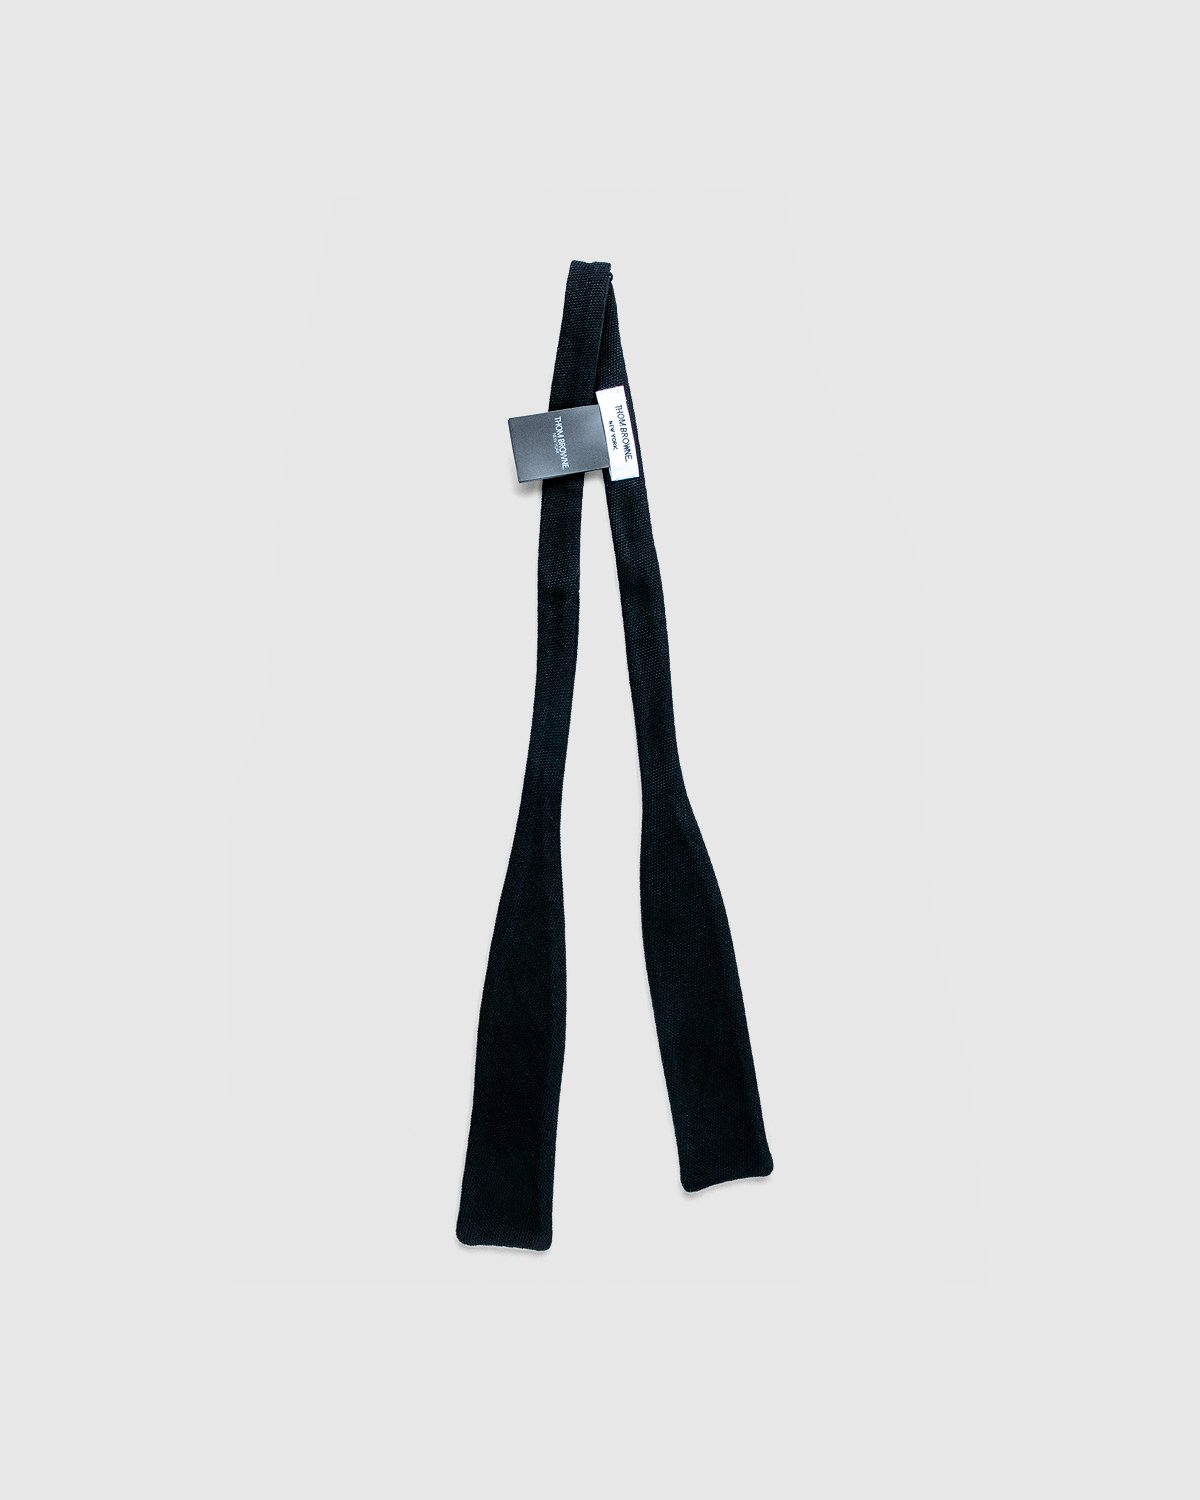 Thom Browne x Highsnobiety - Classic Bow Tie Black - Accessories - Black - Image 2